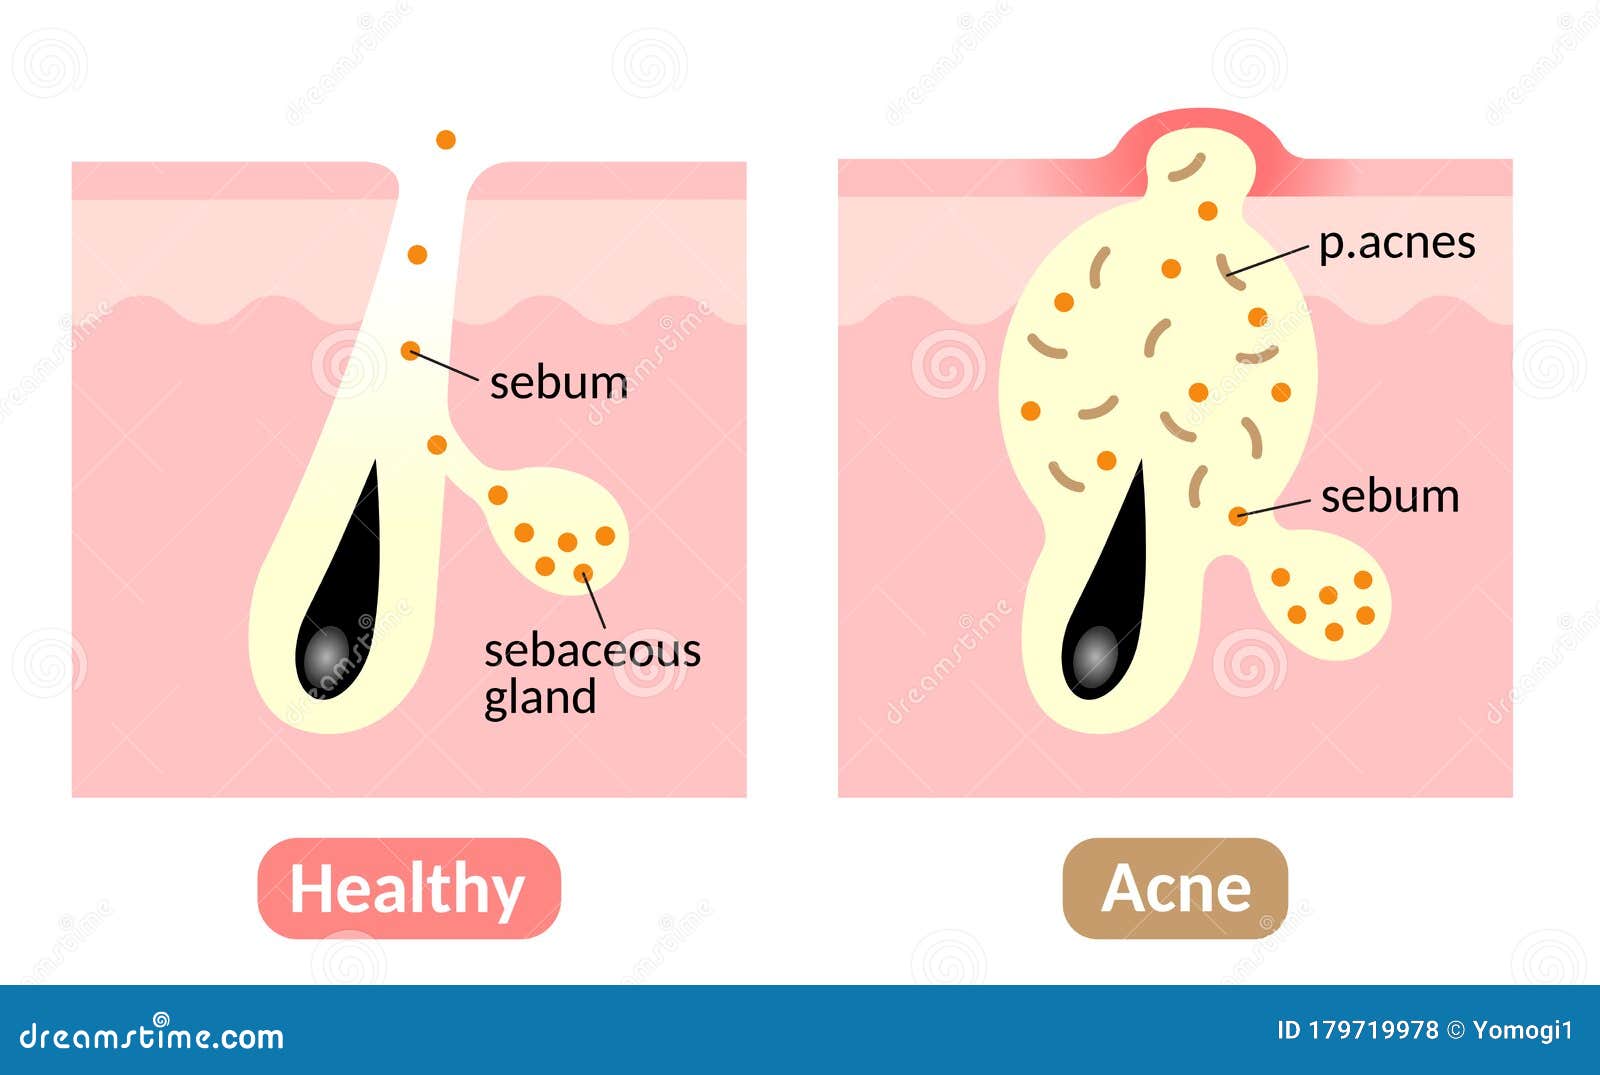 Acne Formation Process Types Of Acne Healthy Skin Sebum Plug